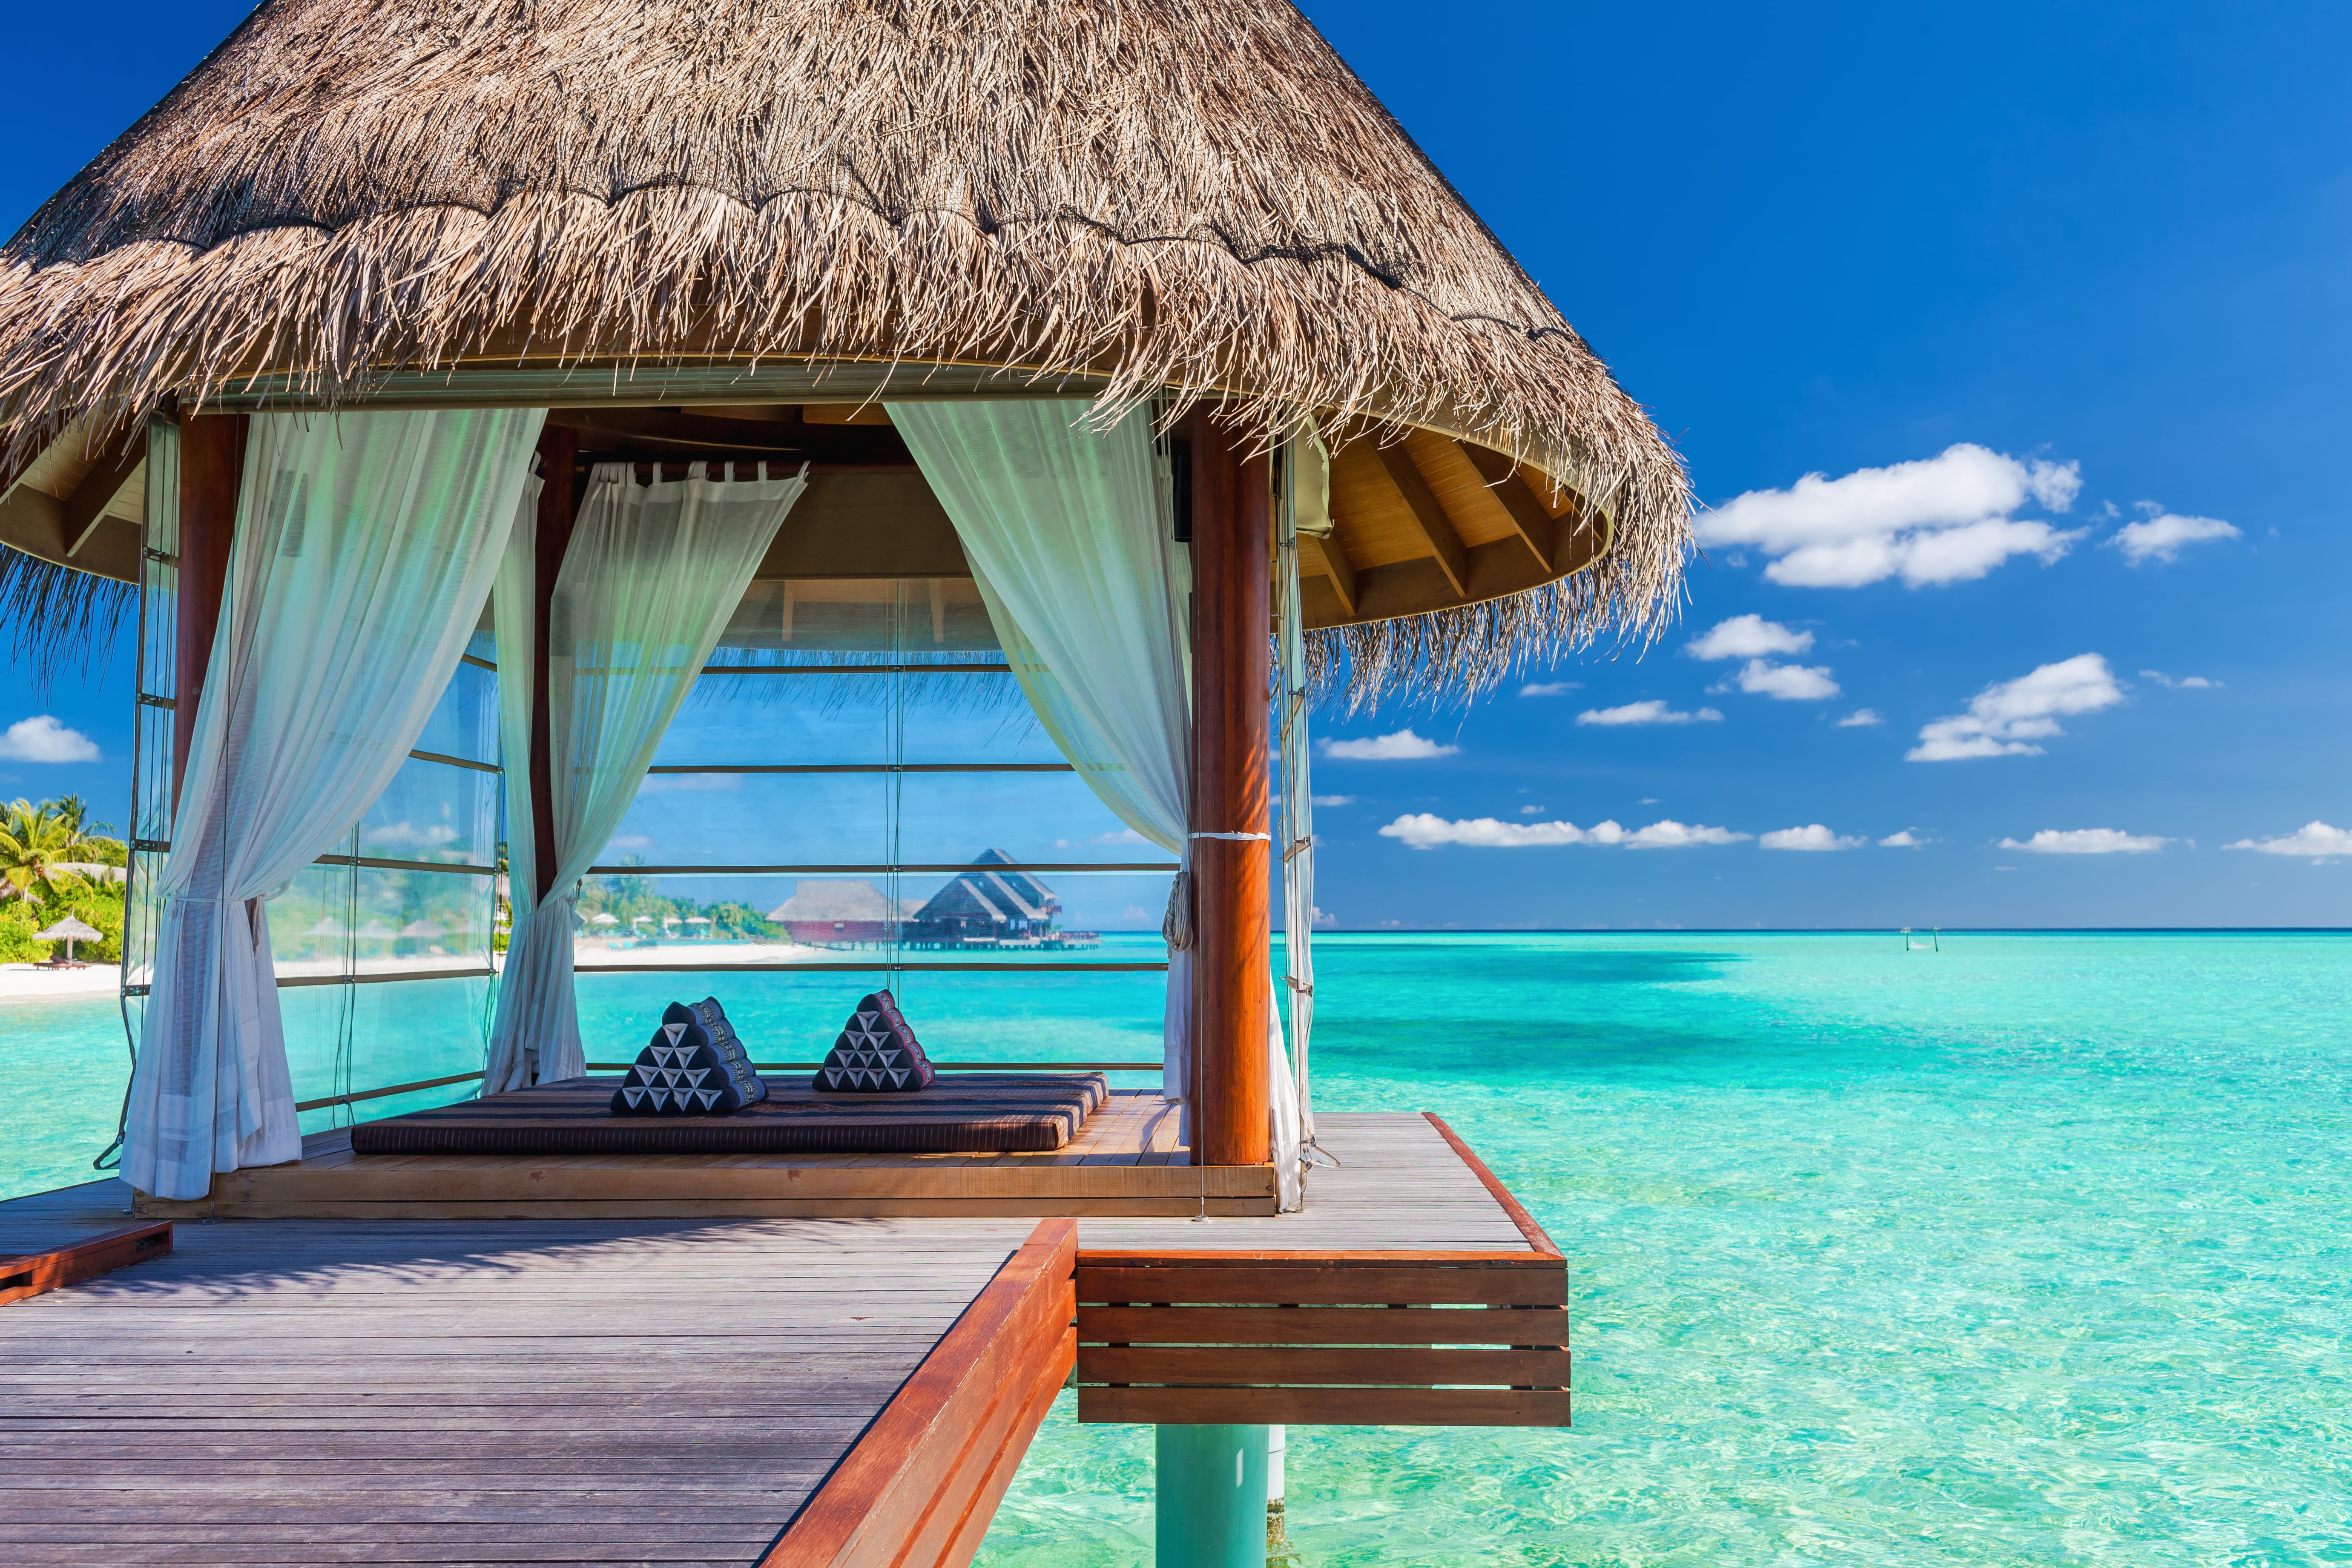 A beautiful water view vista in the Maldives